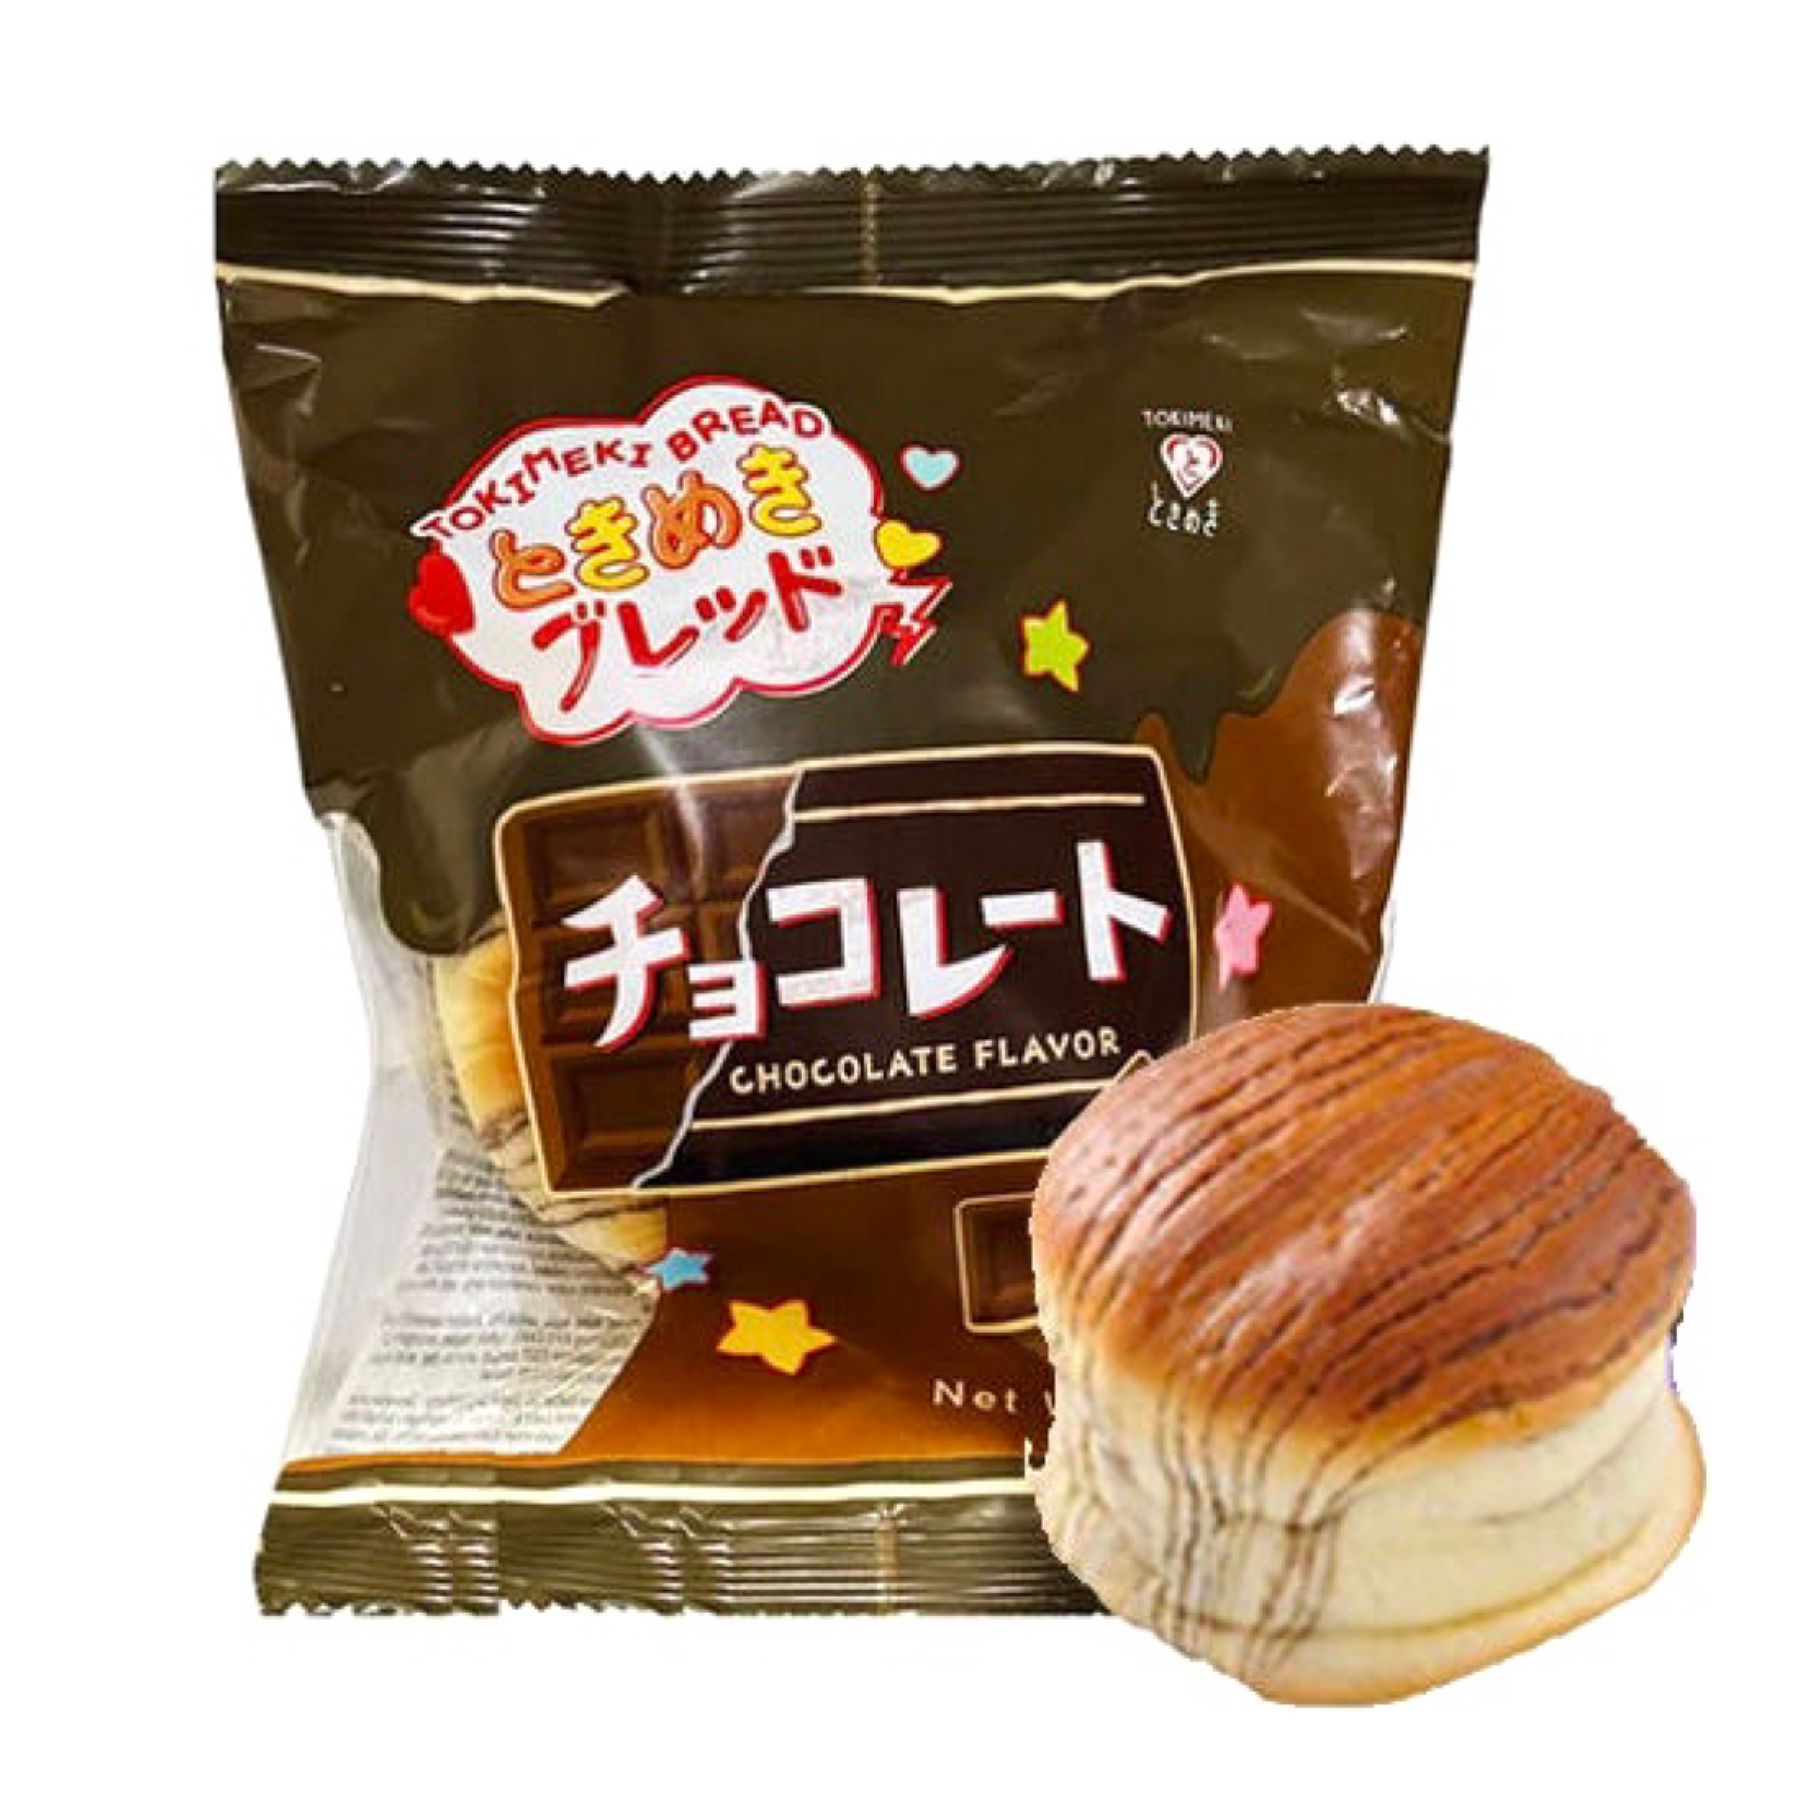 Tokimeki-Brot Schokolade 70g